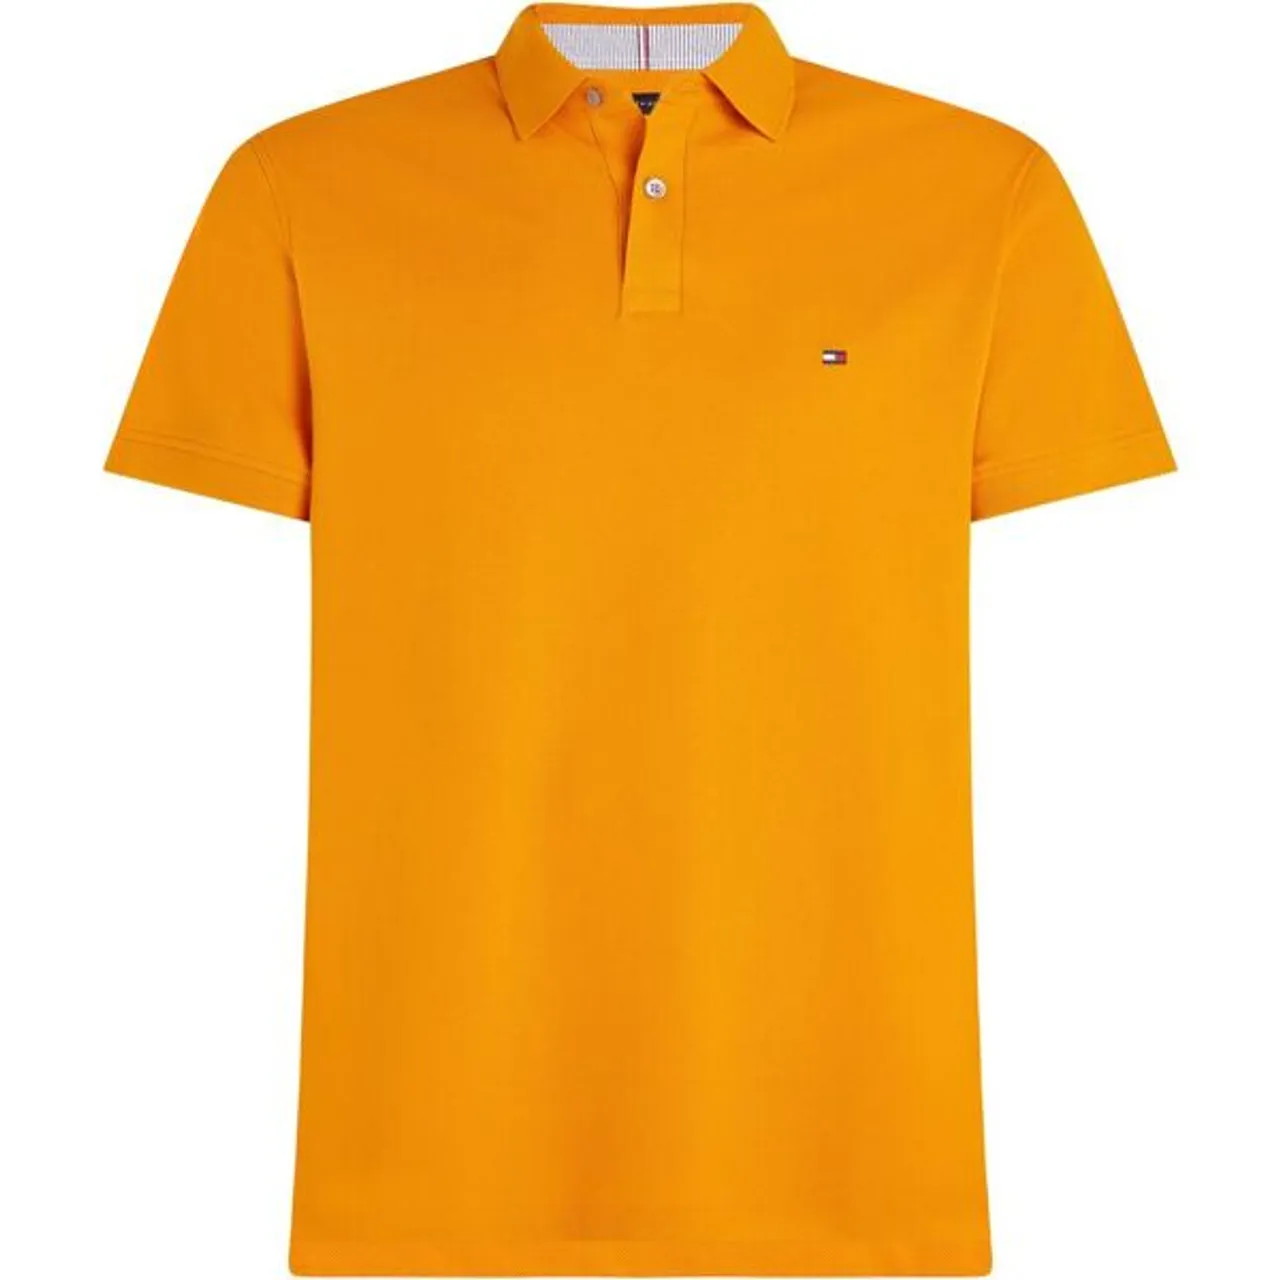 Poloshirt TOMMY HILFIGER "1985 REGULAR POLO" Gr. S, orange (rich ochre) Herren Shirts Kurzarm aus Piqué